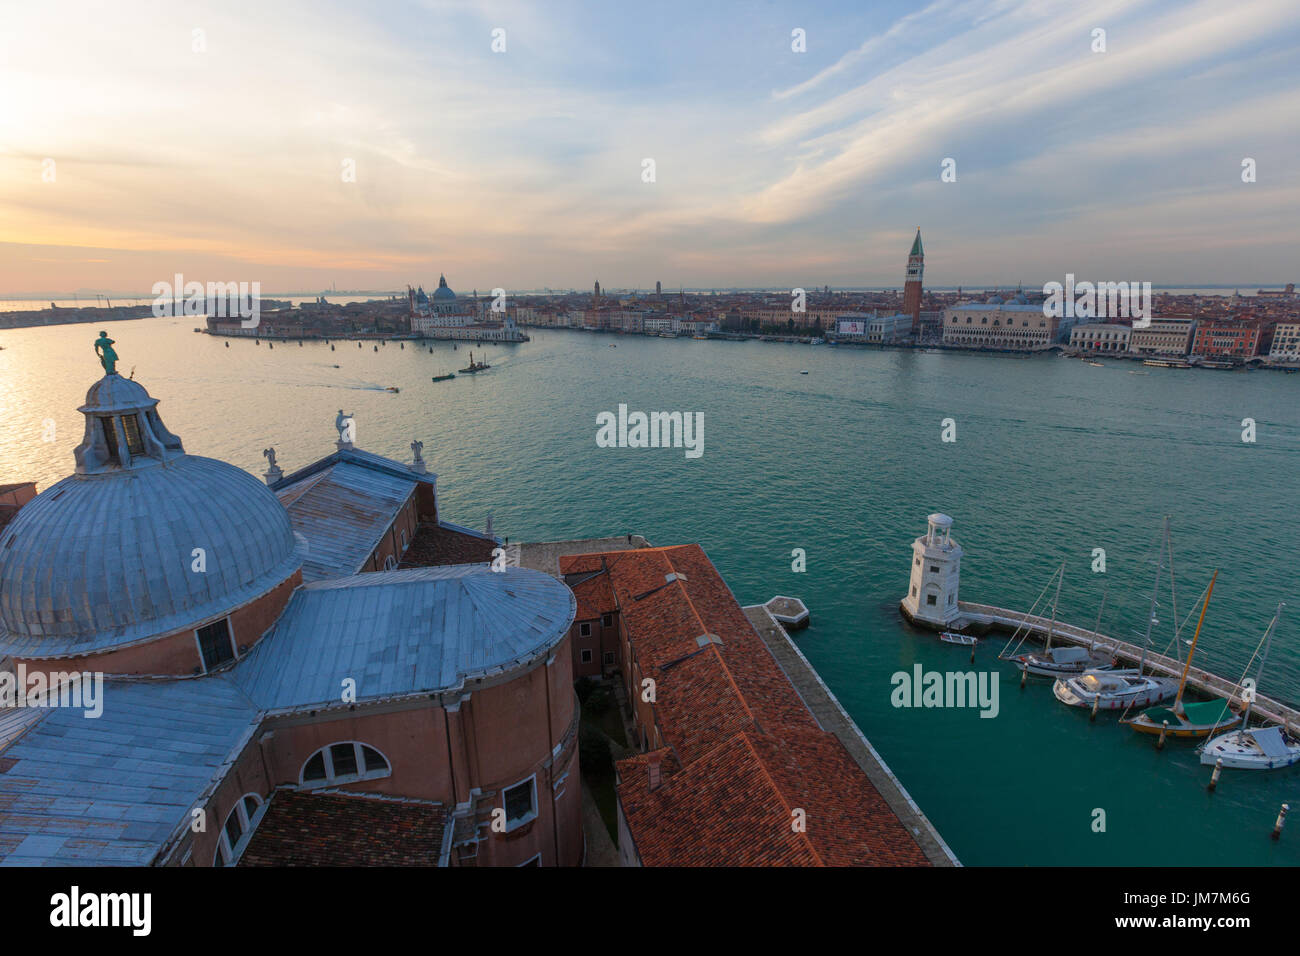 Venice sunset aerial view Stock Photo - Alamy